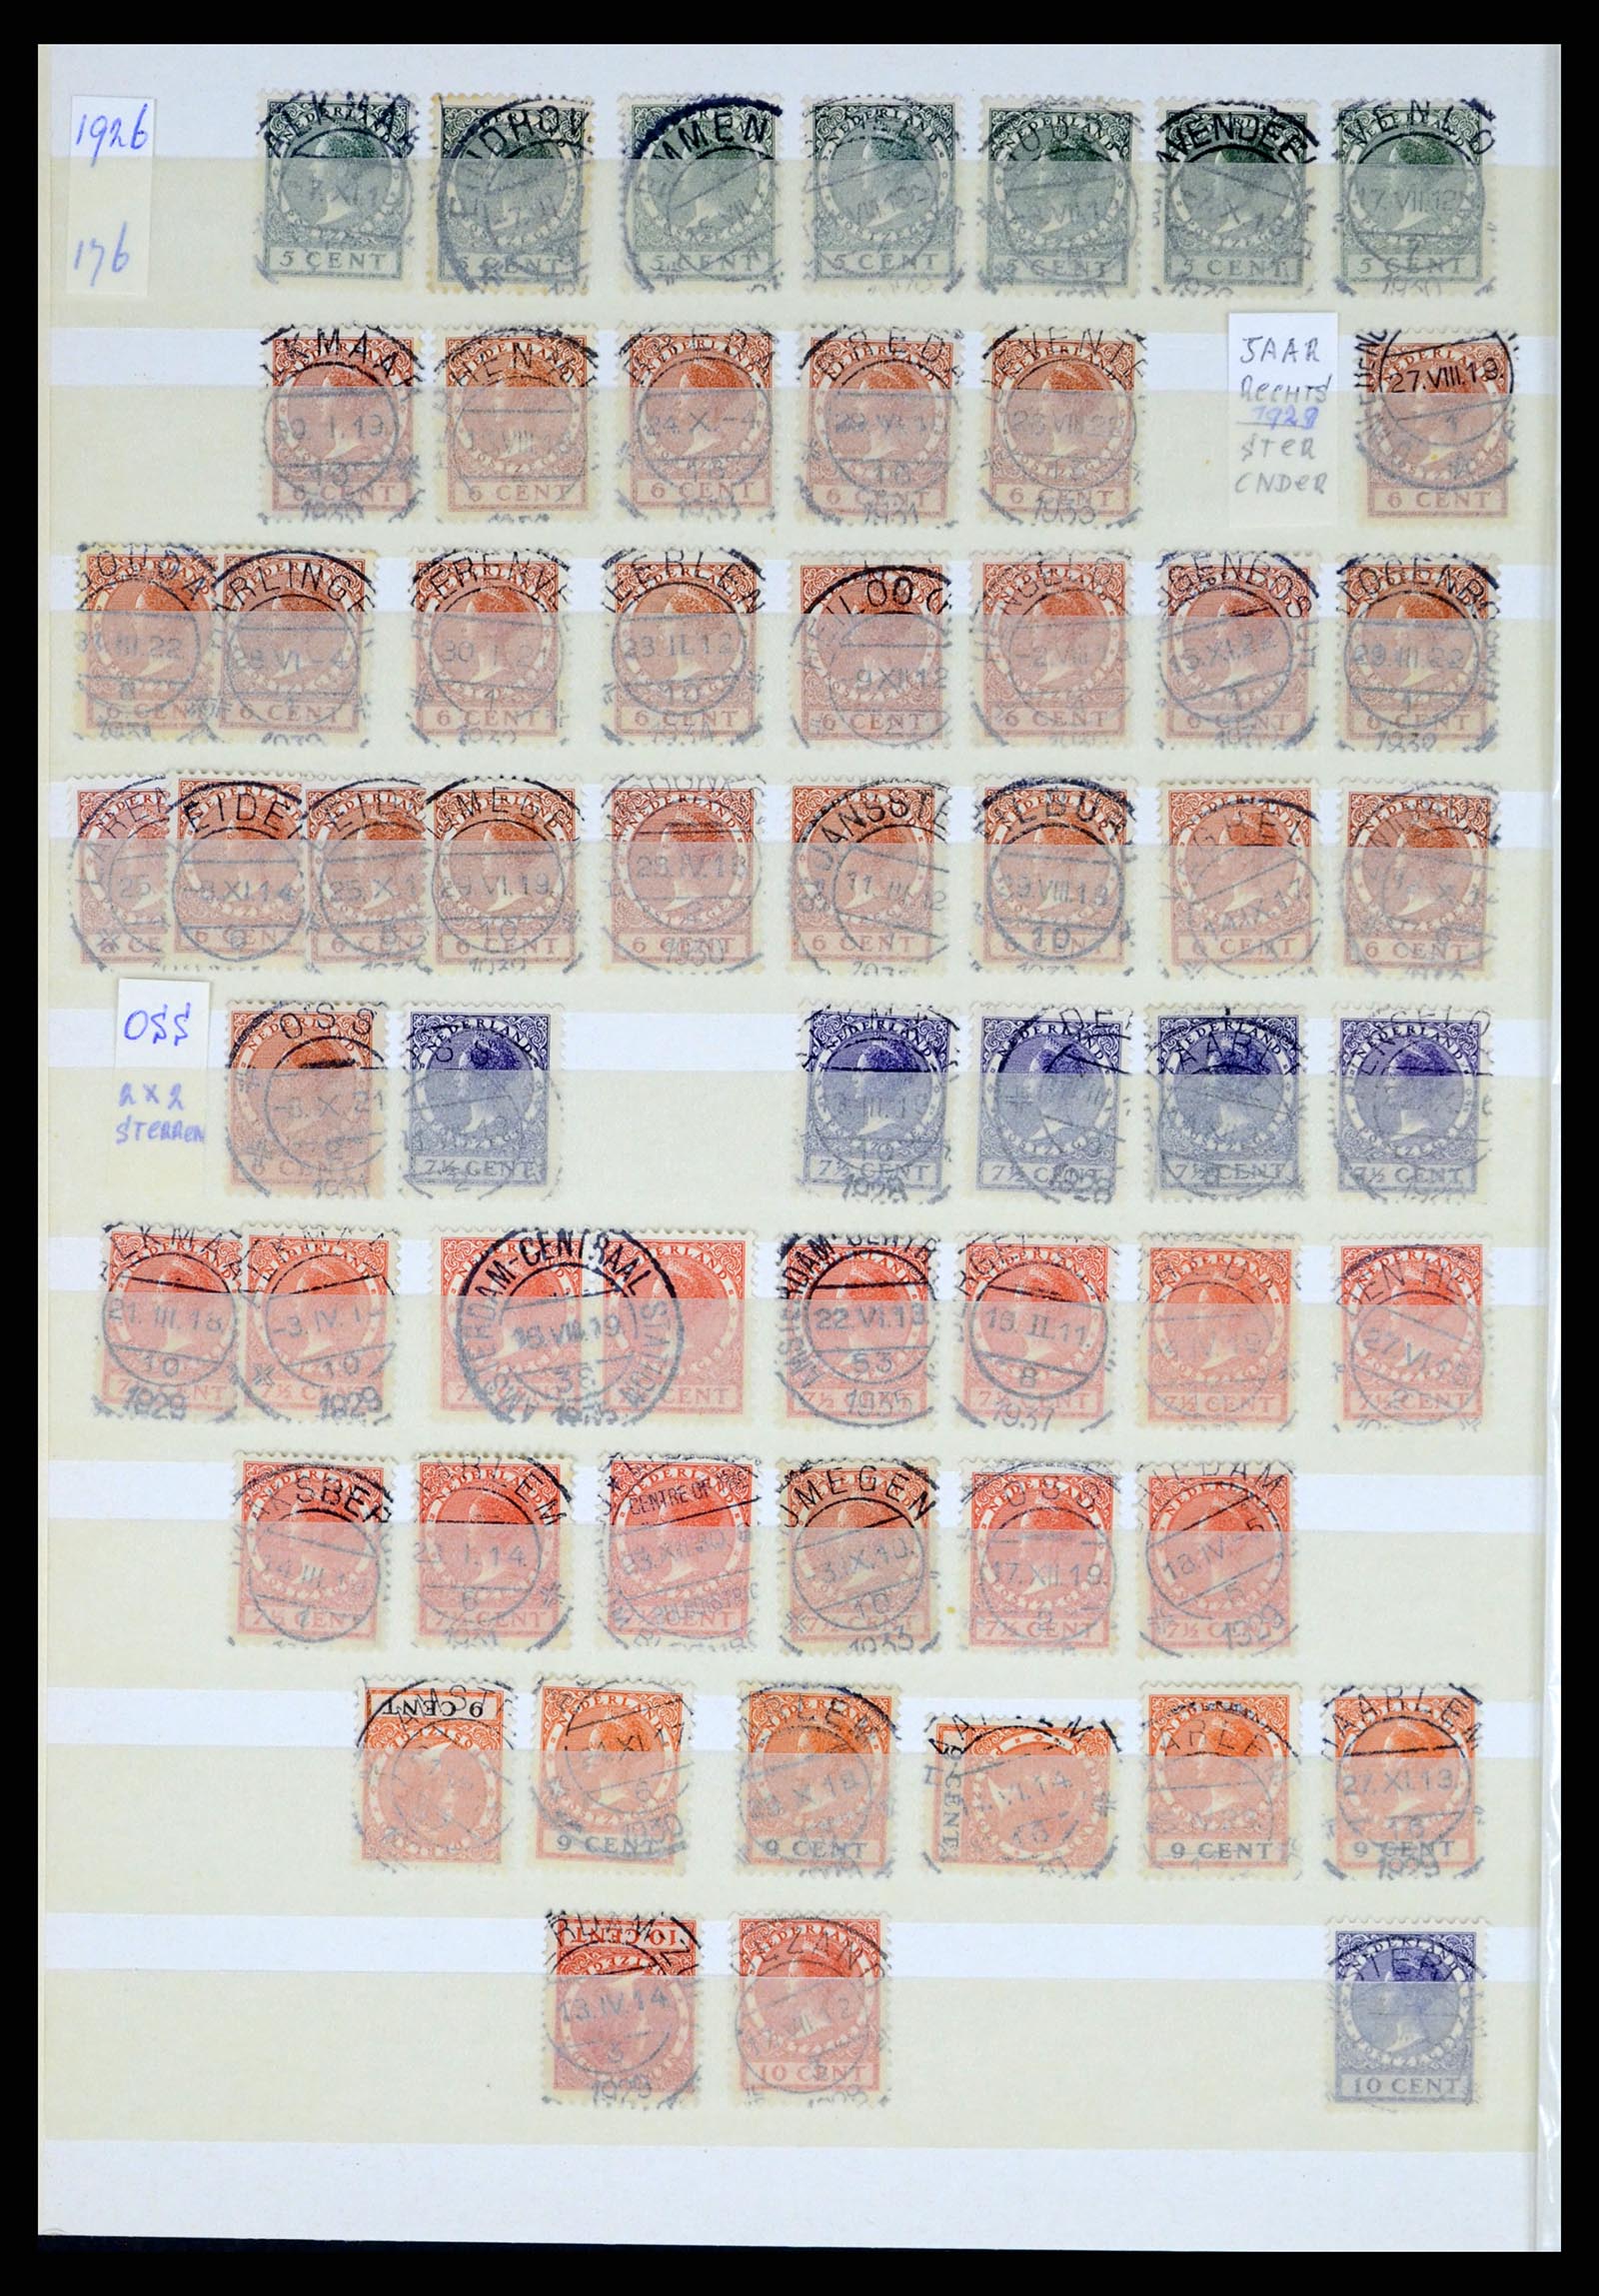 37424 006 - Stamp collection 37424 Netherlands shortbar cancels.